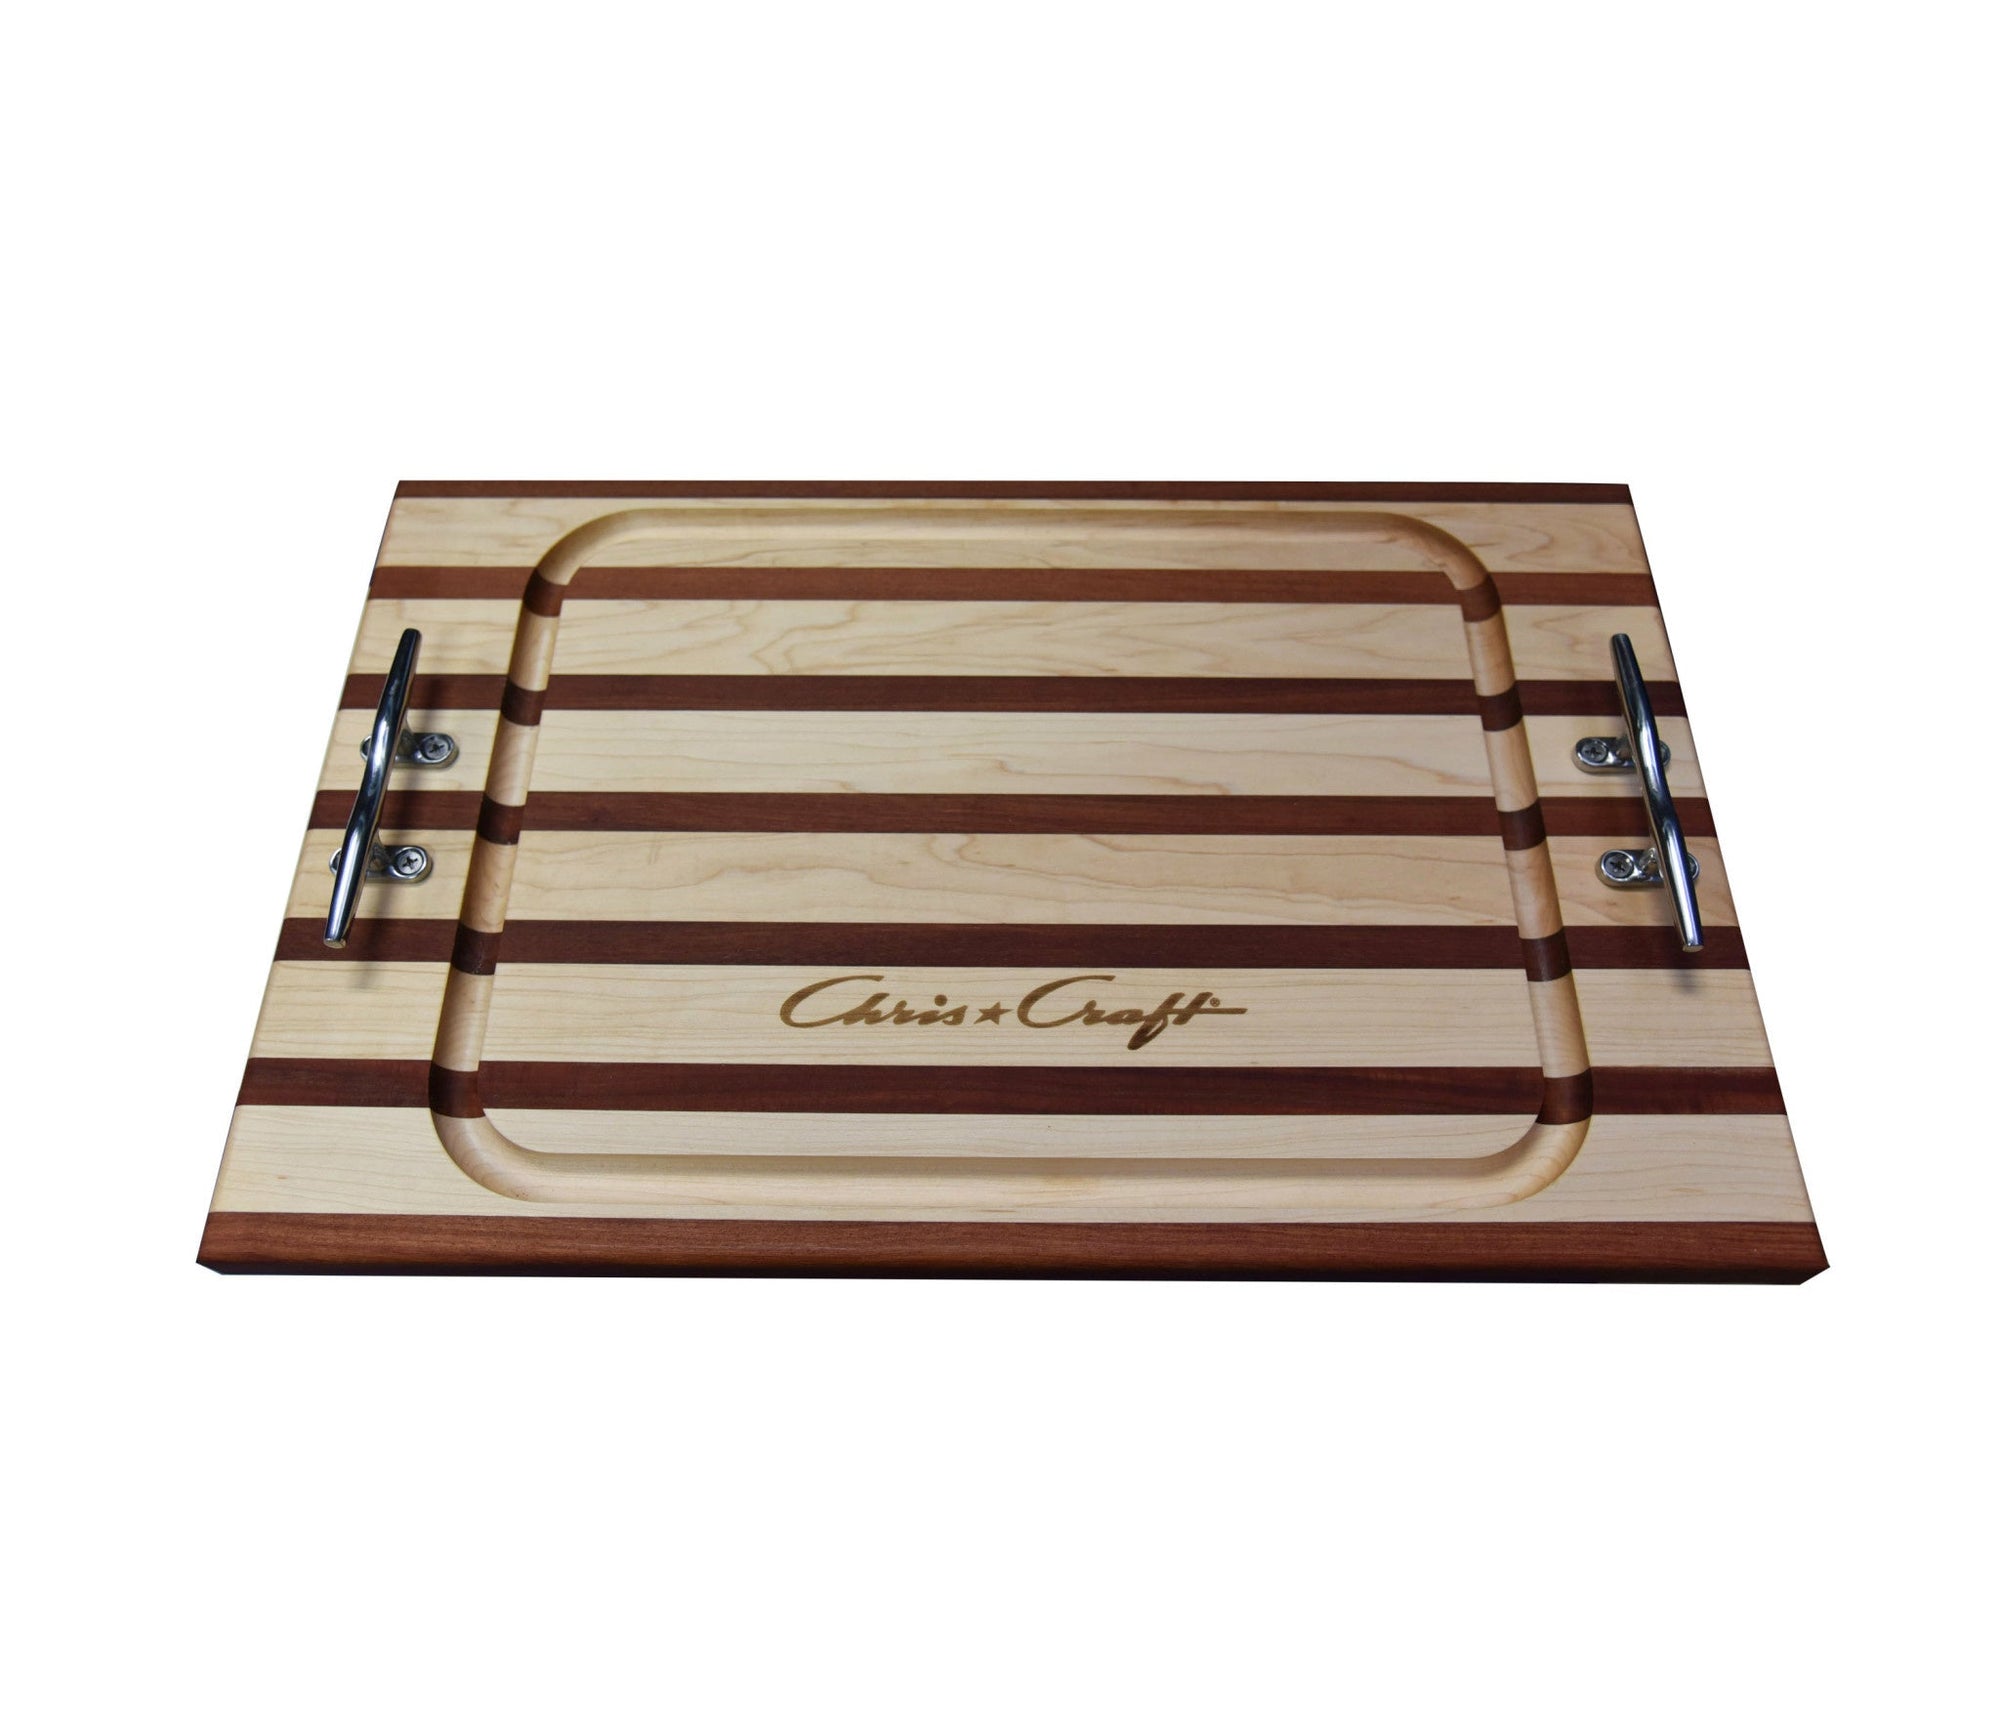 Chris-Craft Large Steak Board w/ Handle - 24" x 15"